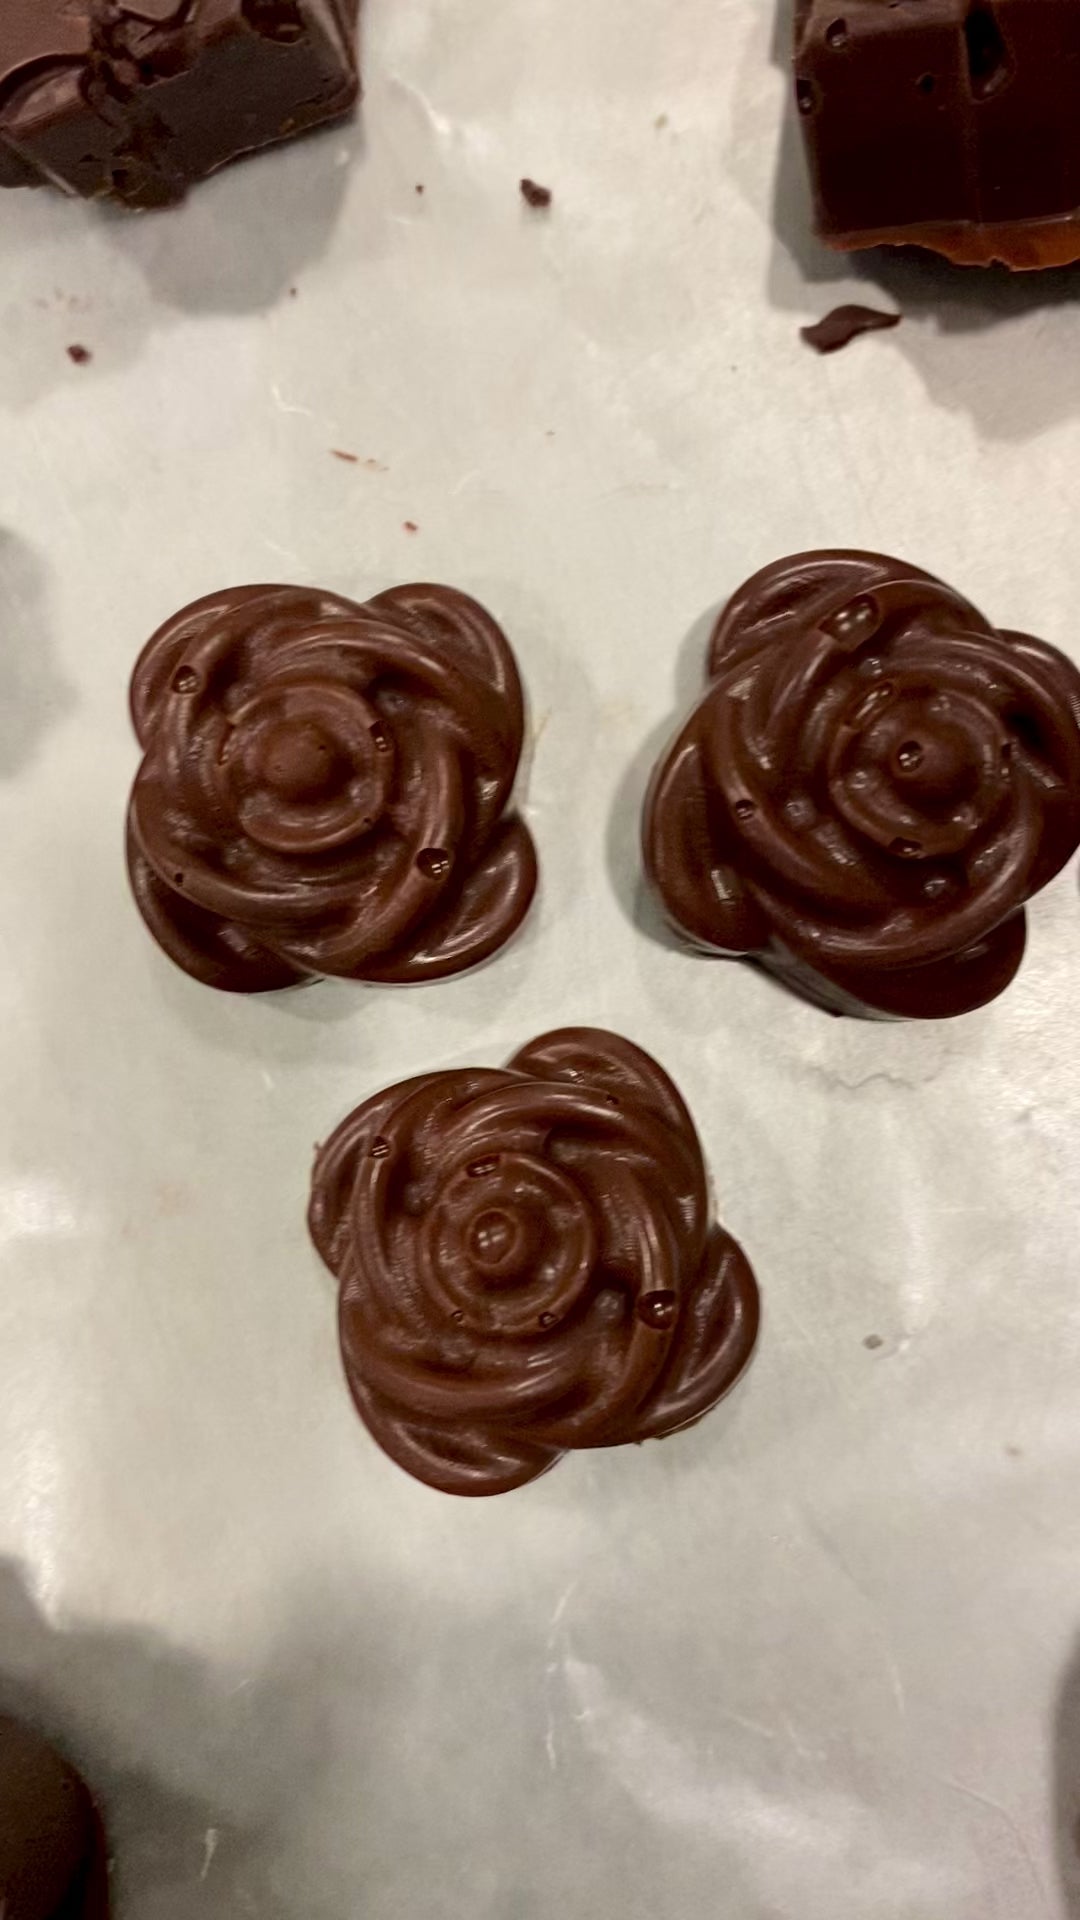 Chocolate Flowers